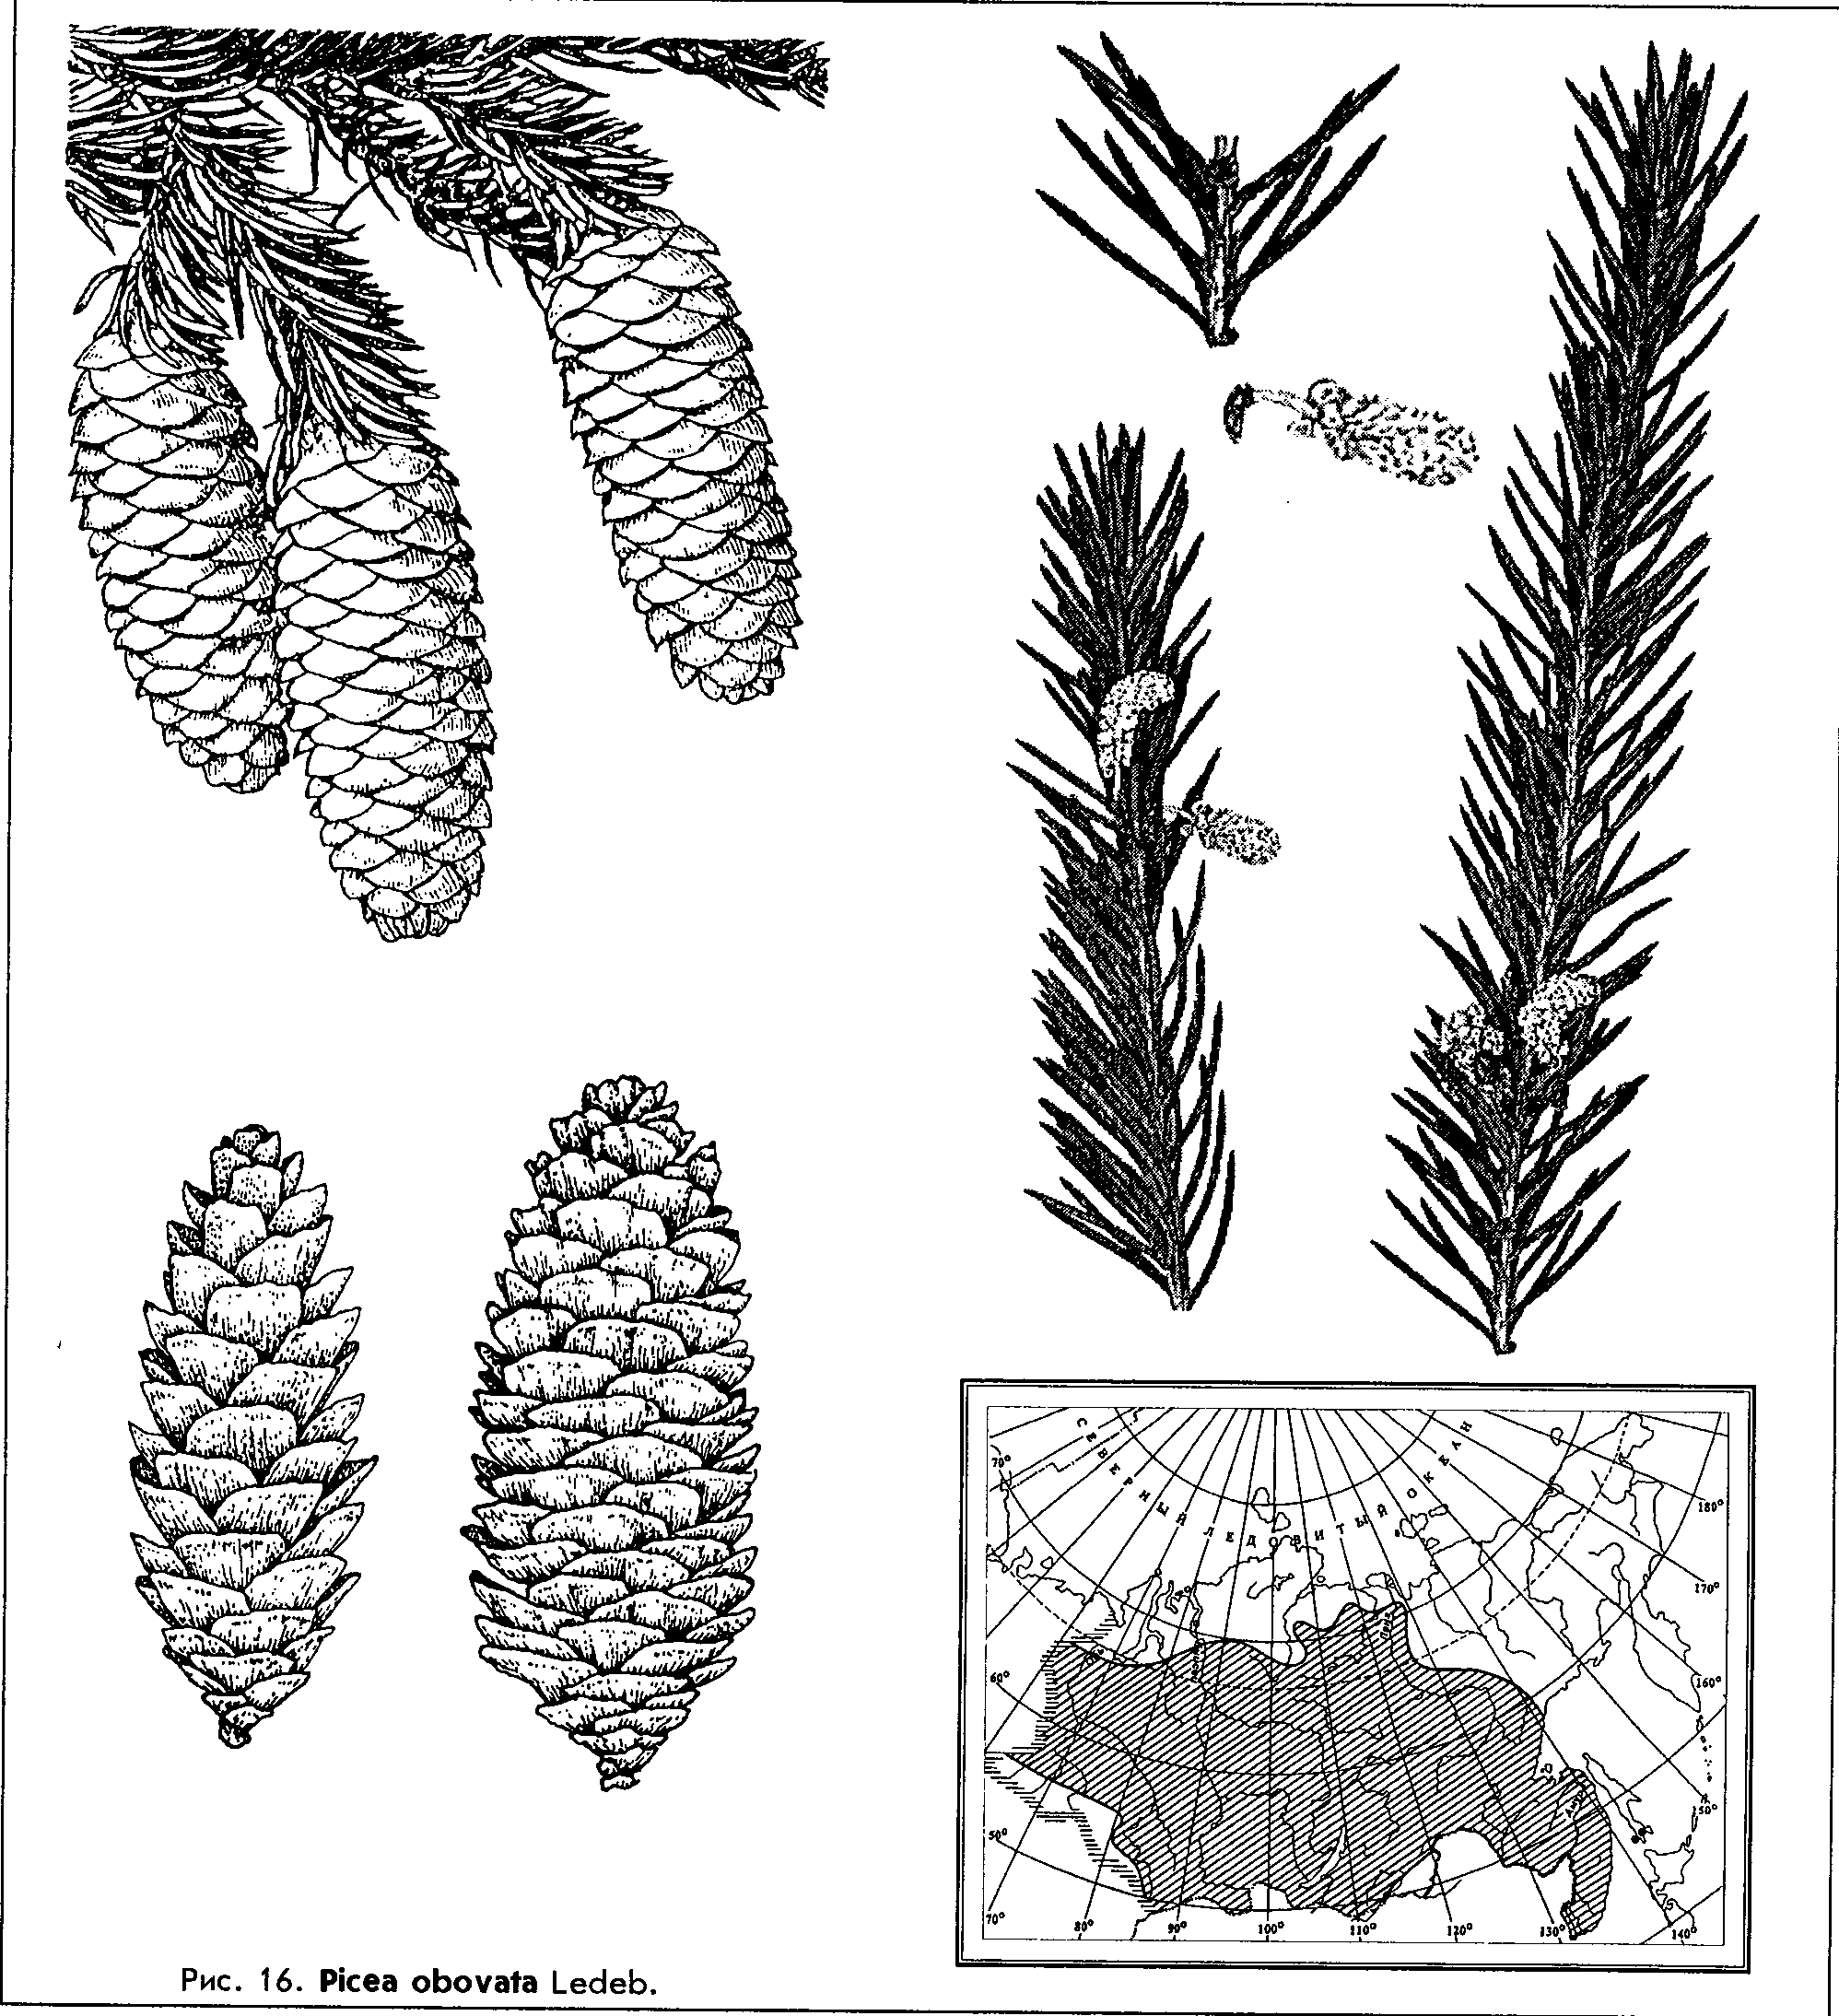 Picea obovata Ledeb. — Ель сибирская (Ш) Picea-11